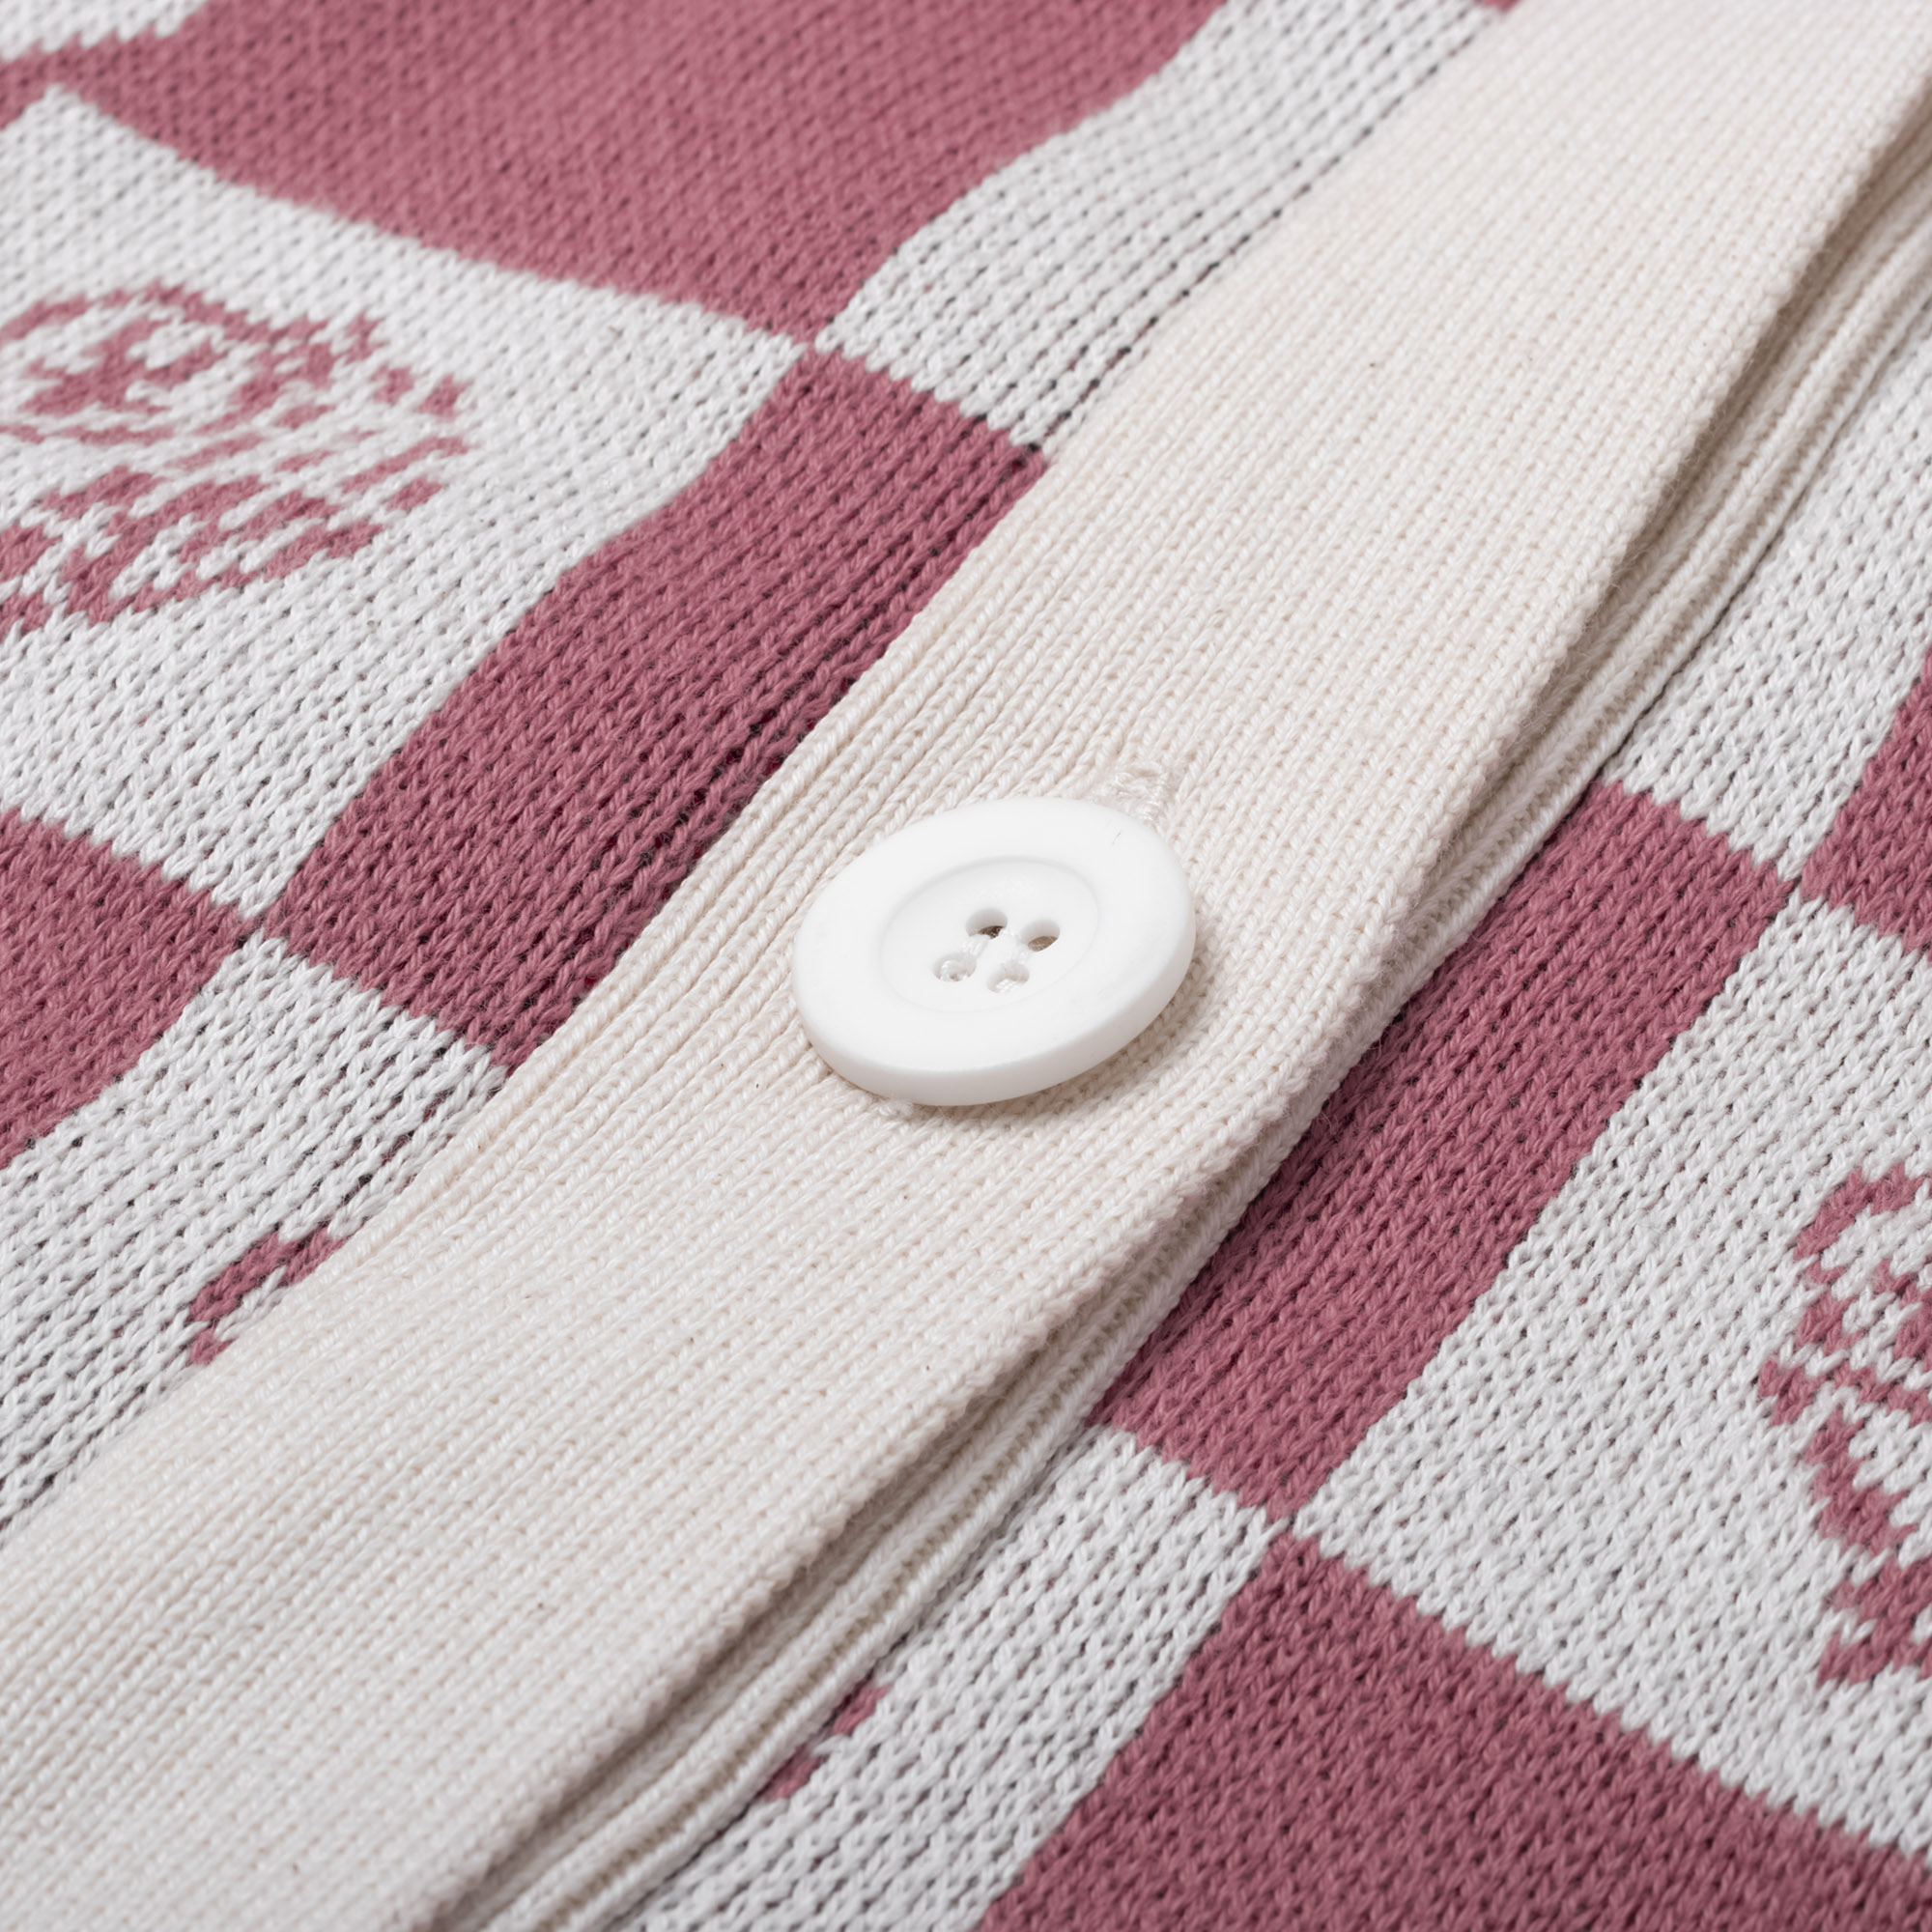 Dico Checkerboard Knit Cardigan - Pink